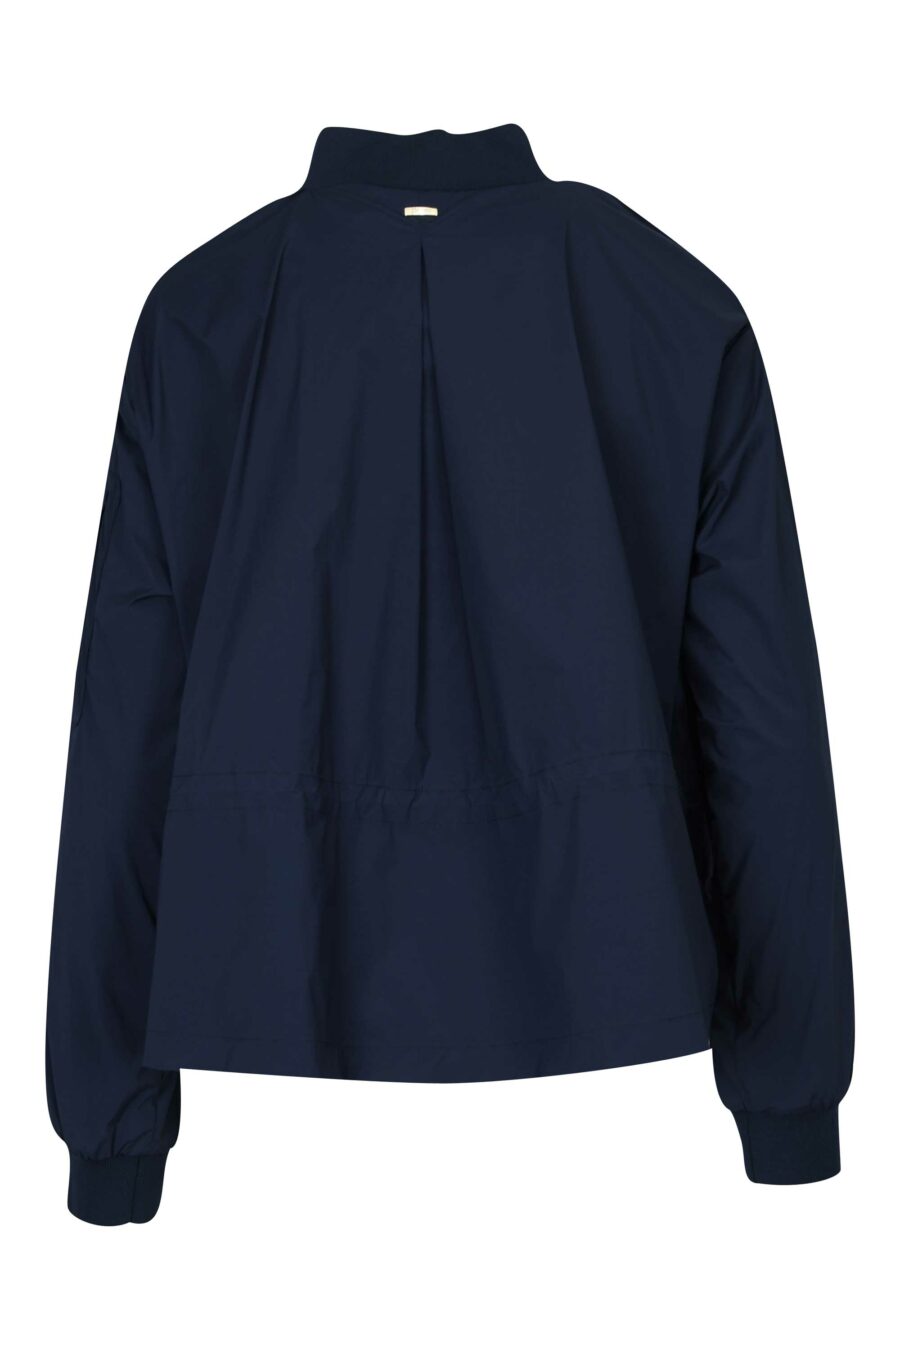 Blue woven jacket with mini-logo - 8055721982335 1